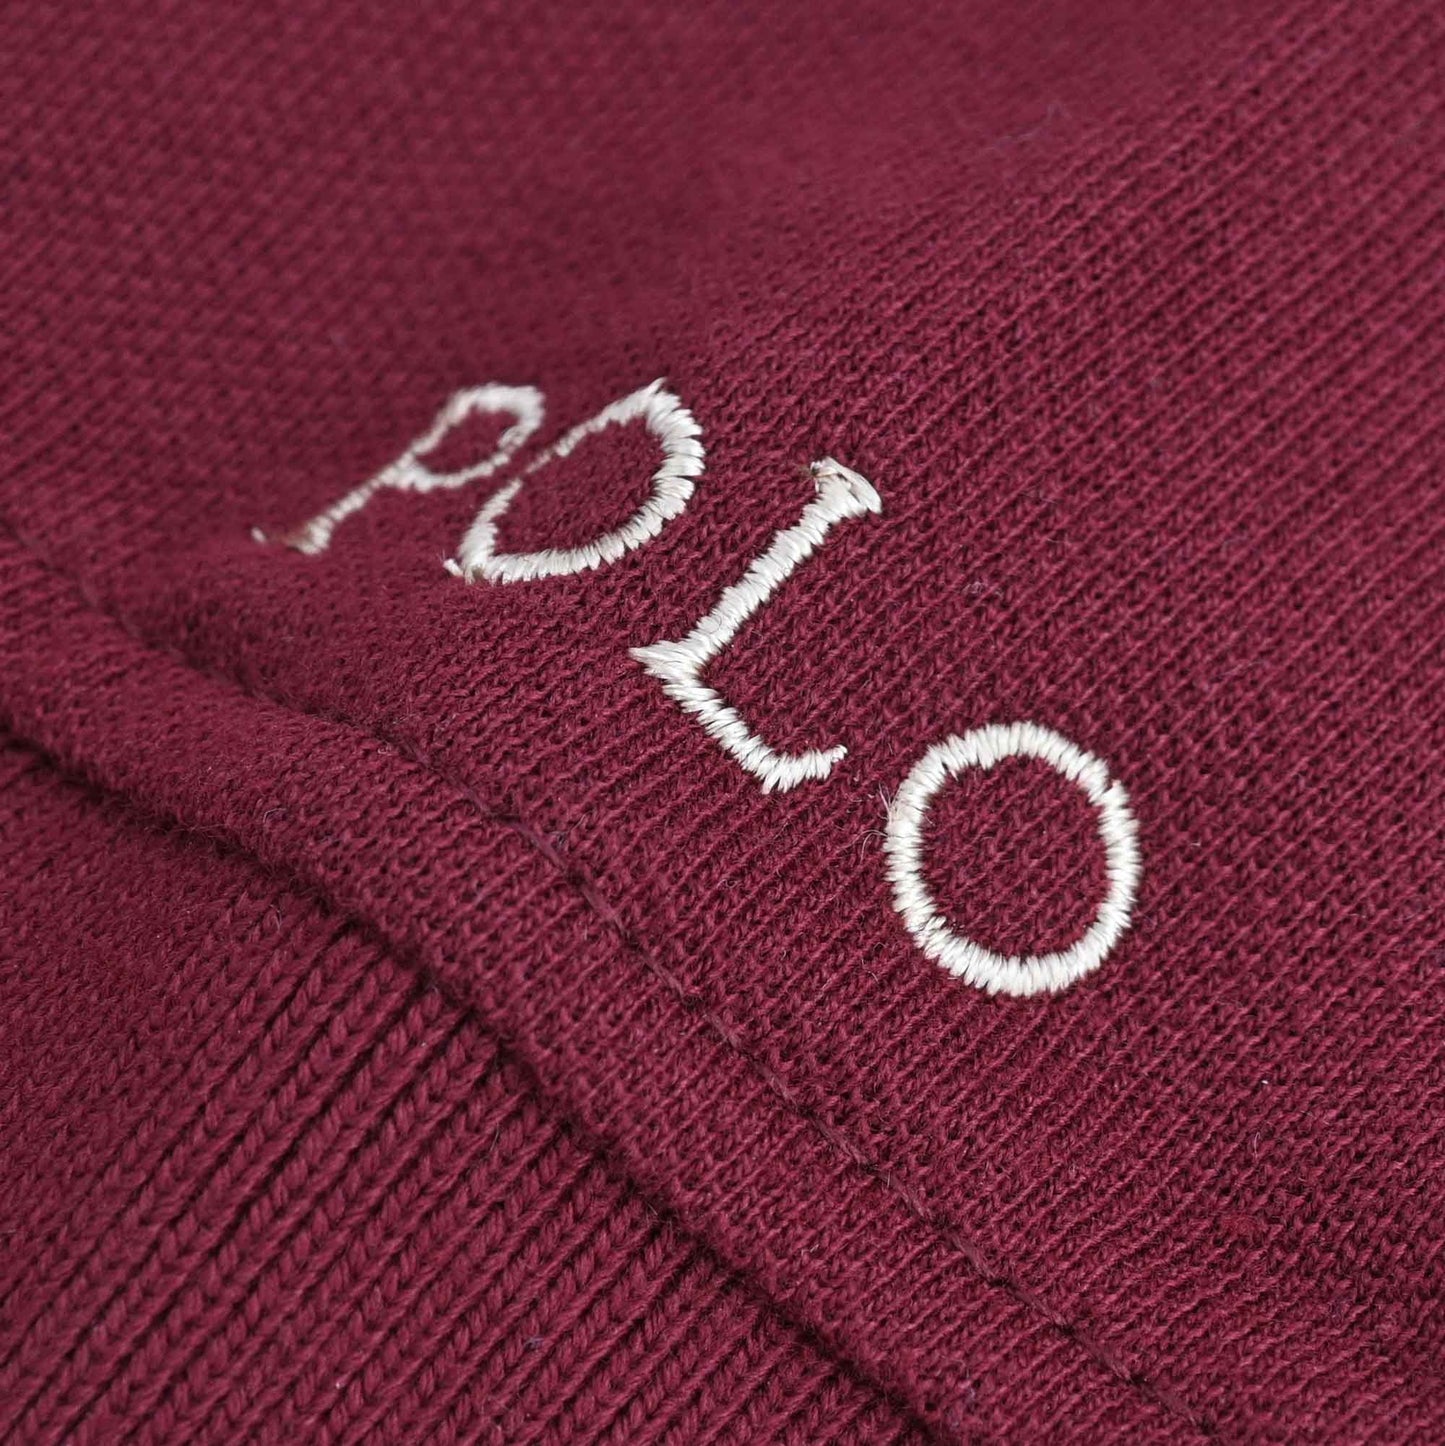 Polo Republica Men's Lion Crest & Polo Embroidered Short Sleeve Polo Shirt